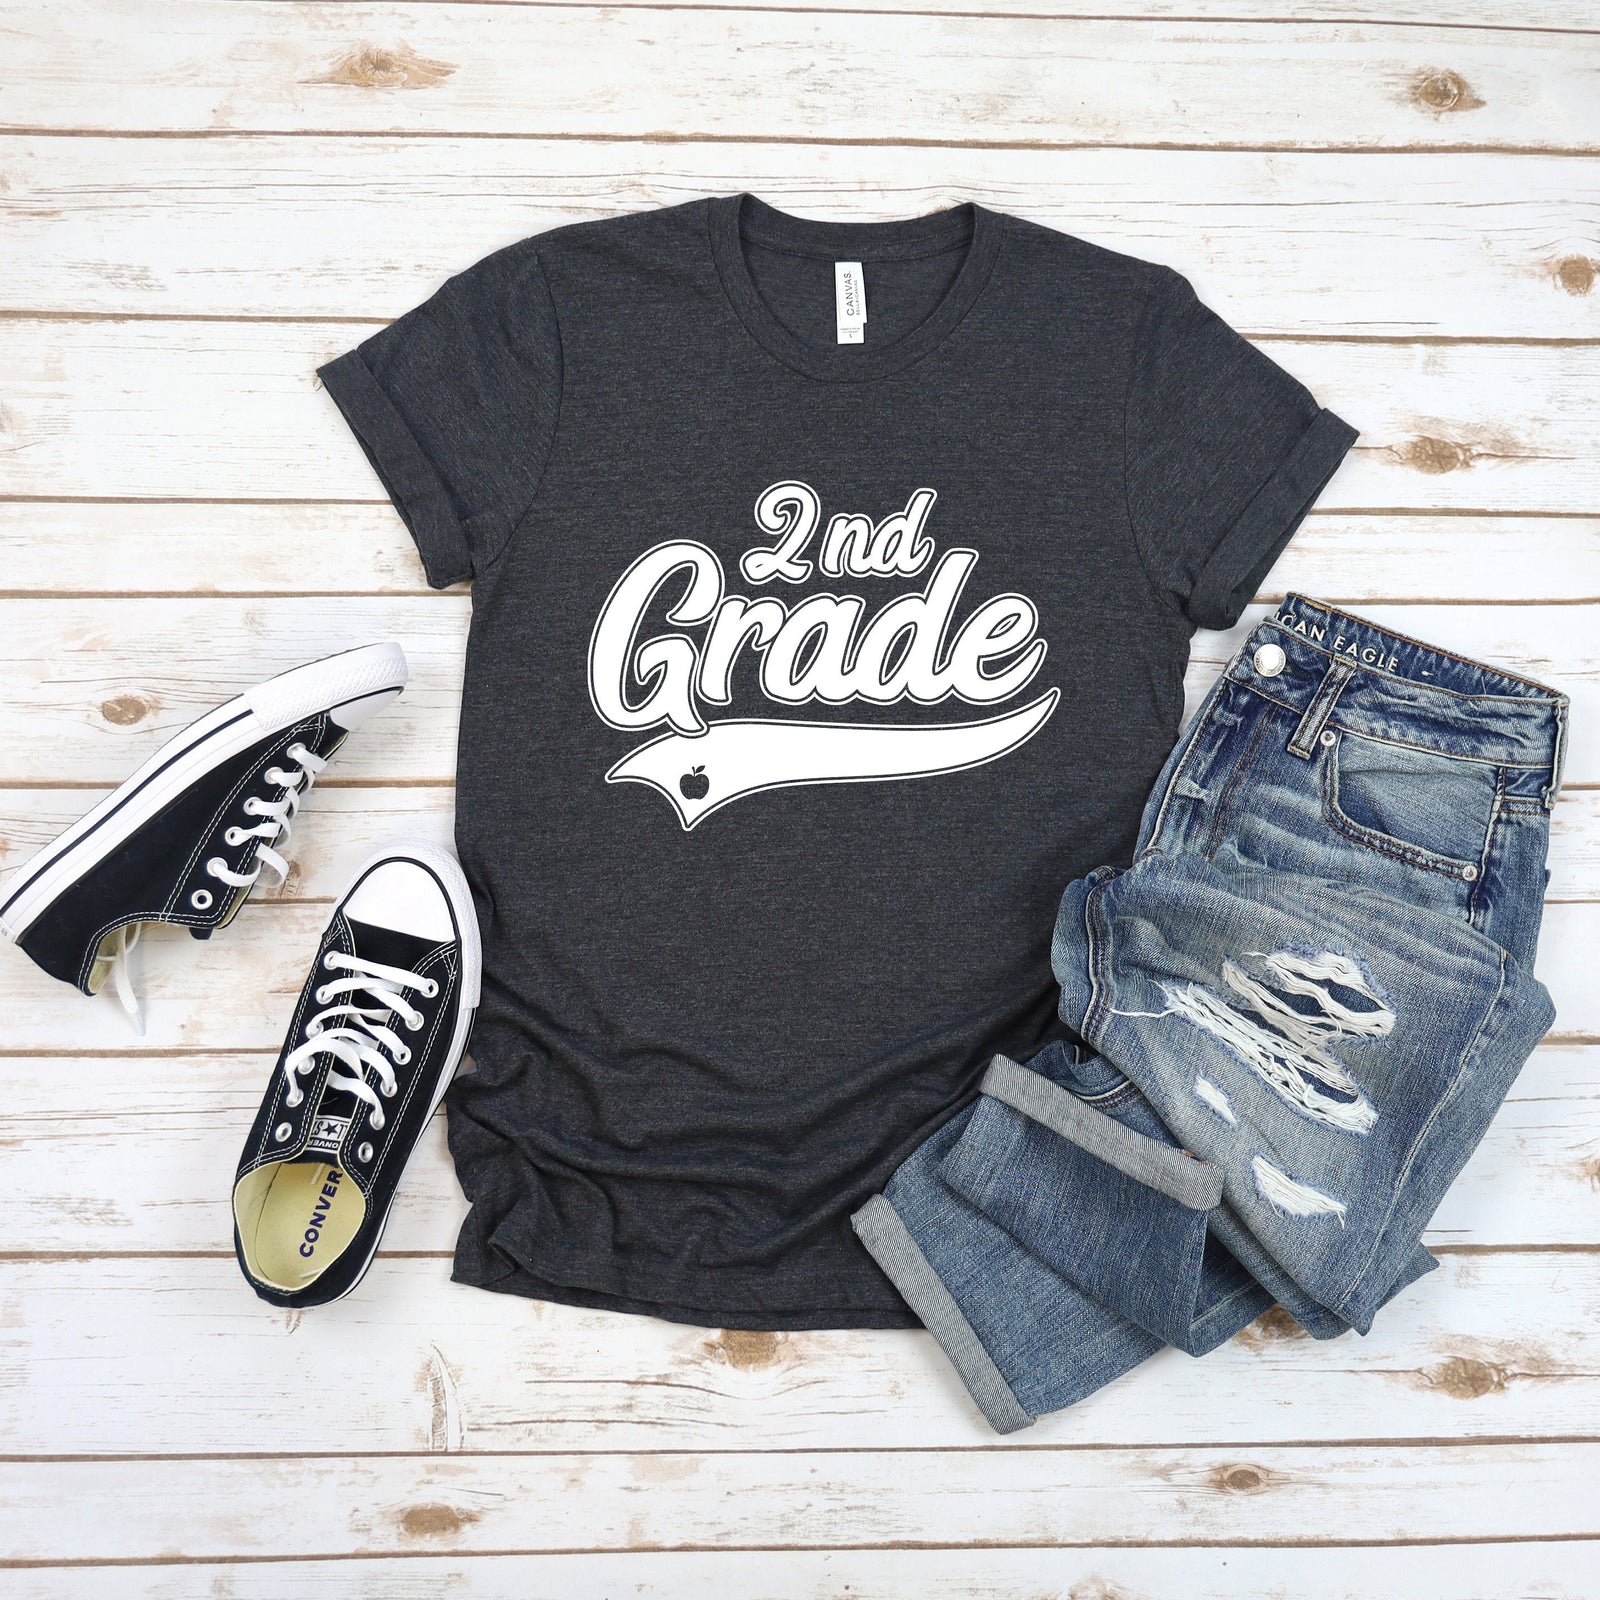 Grade Level Teacher Adult T Shirts - Back to School - First Grade - Second Grade - Third Grade - Fourth Grade - Fifth Grade